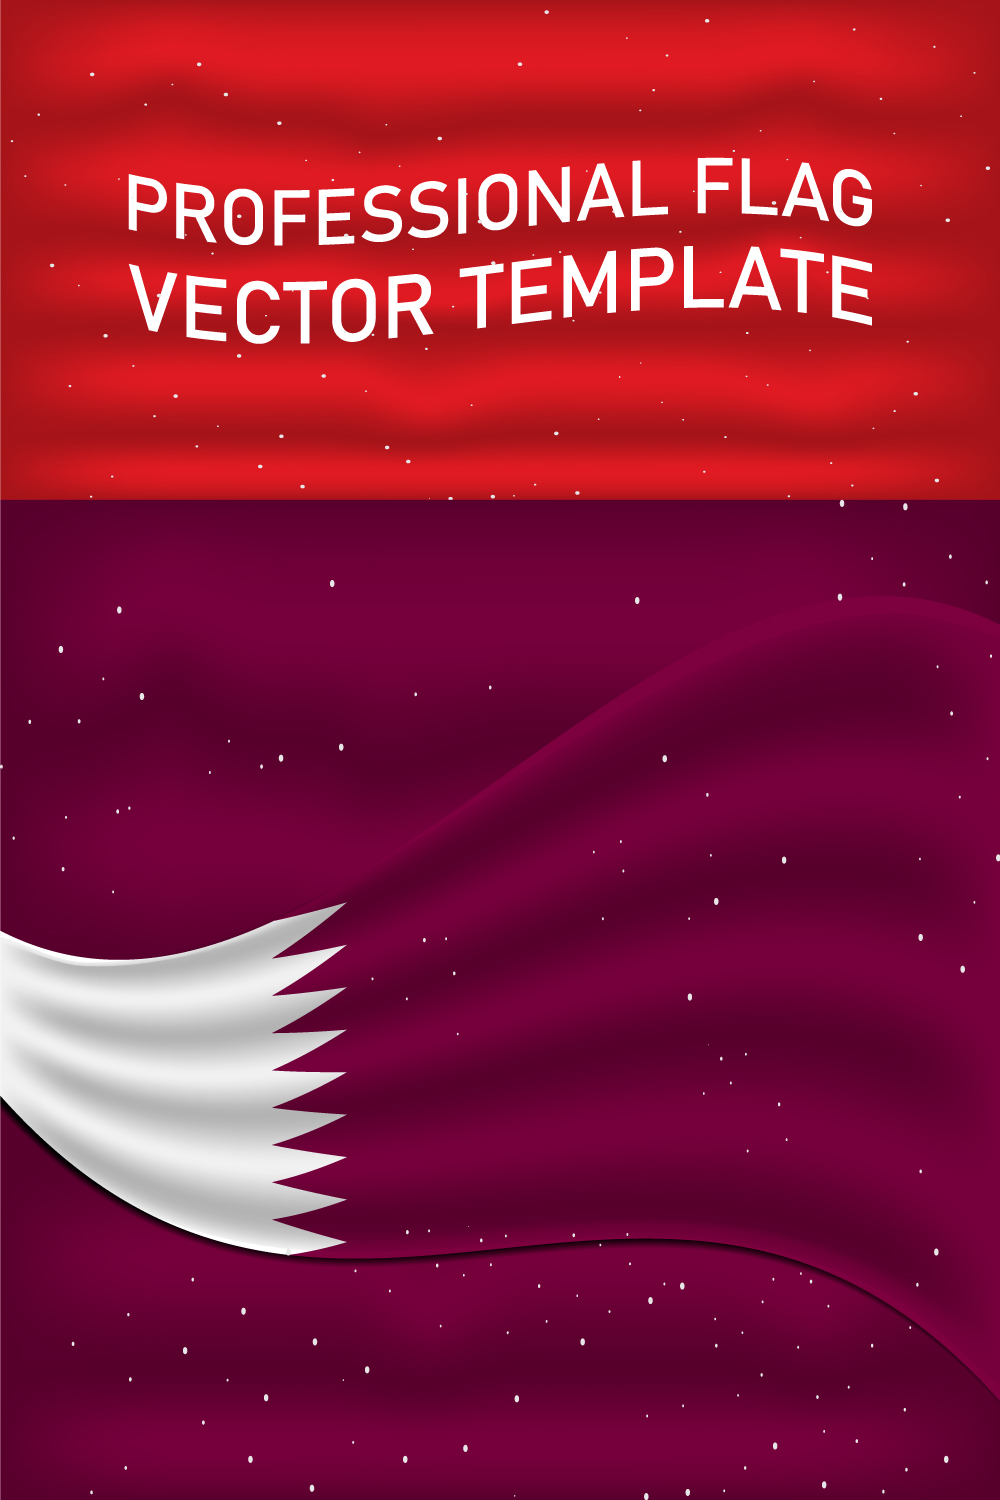 Unique image of the flag of Qatar.